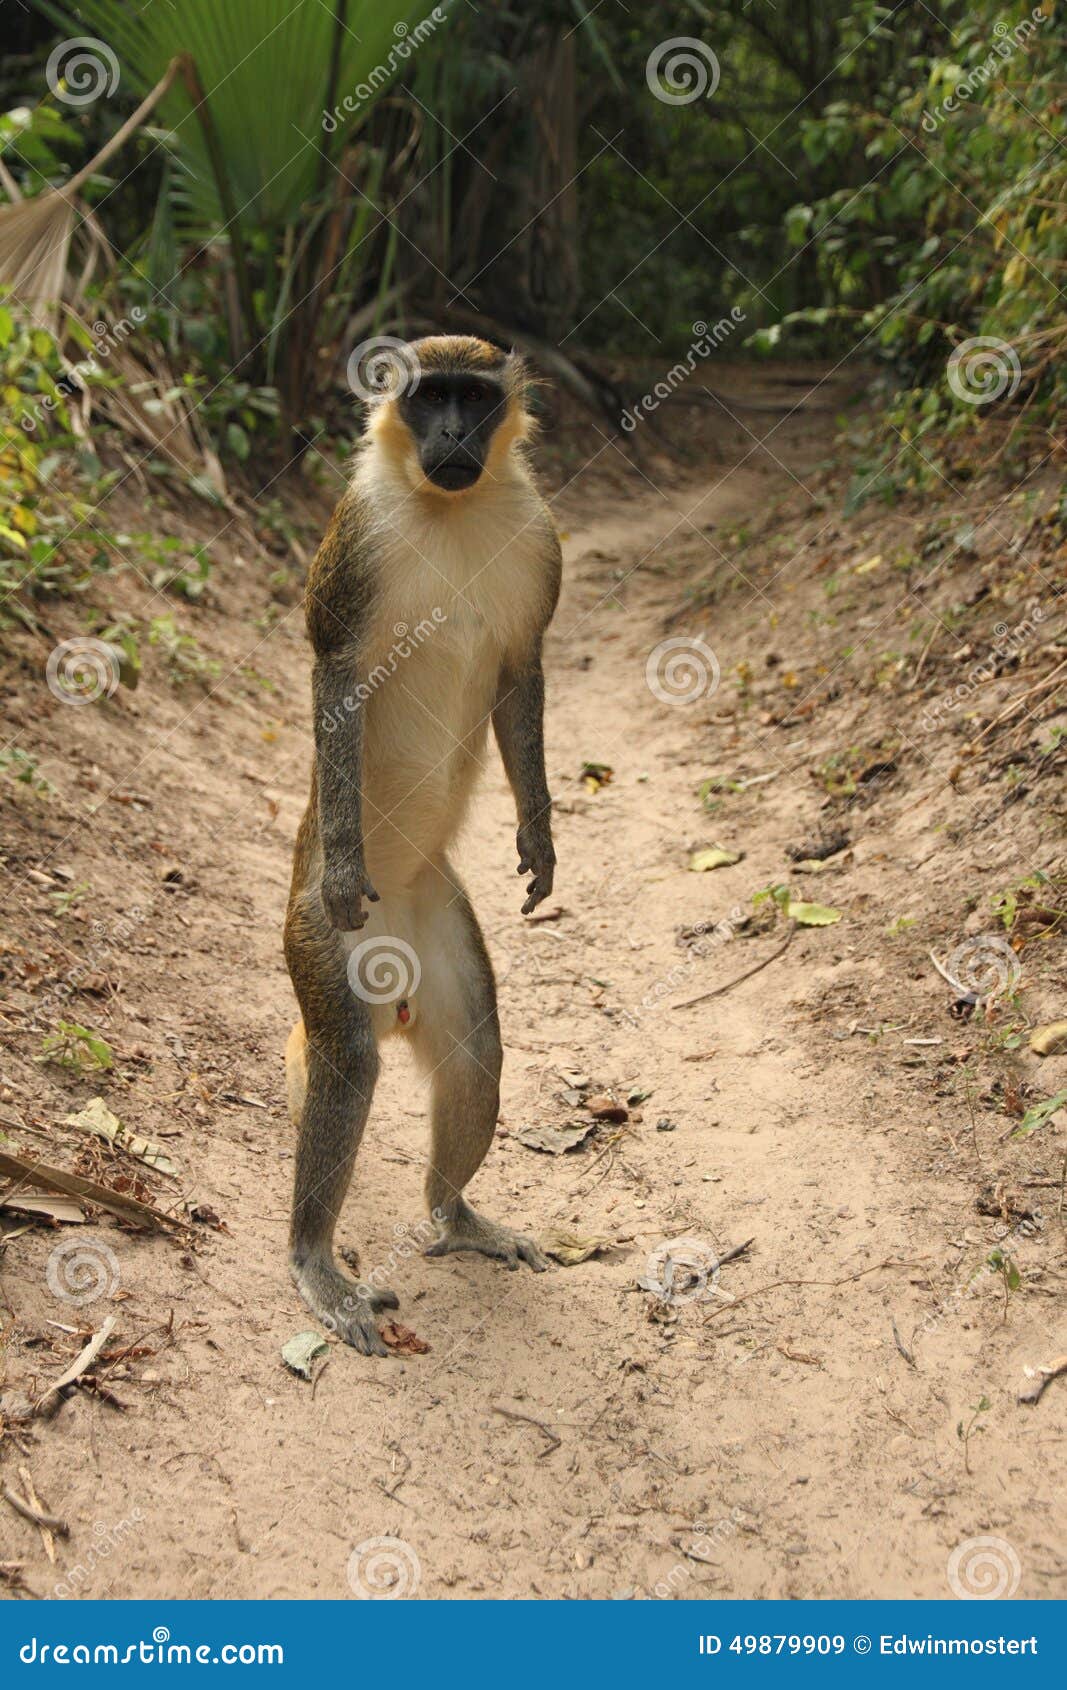  Standing  vervet monkey  stock image Image of africa park 